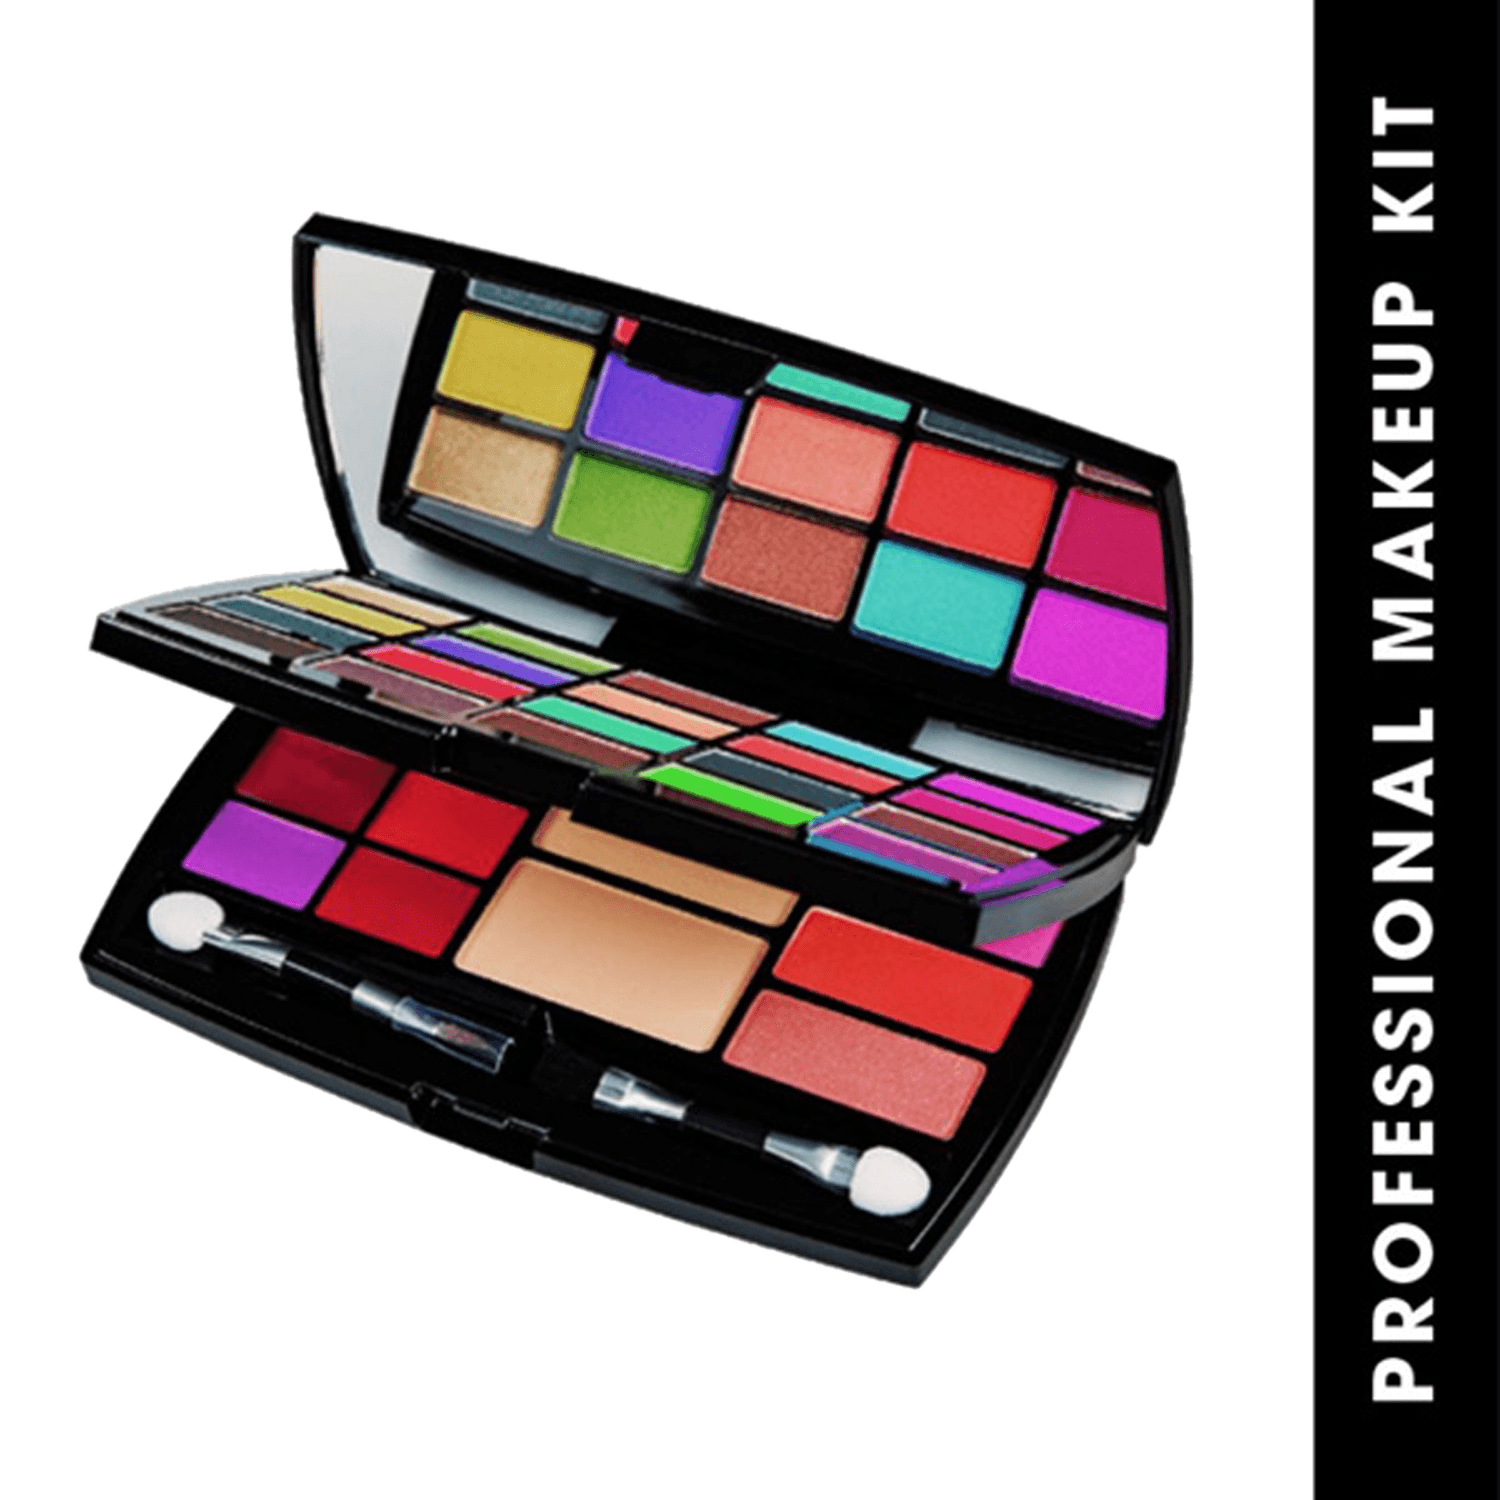 Fashion Colour Professional Makeup Kit - 01 Shade (52g)